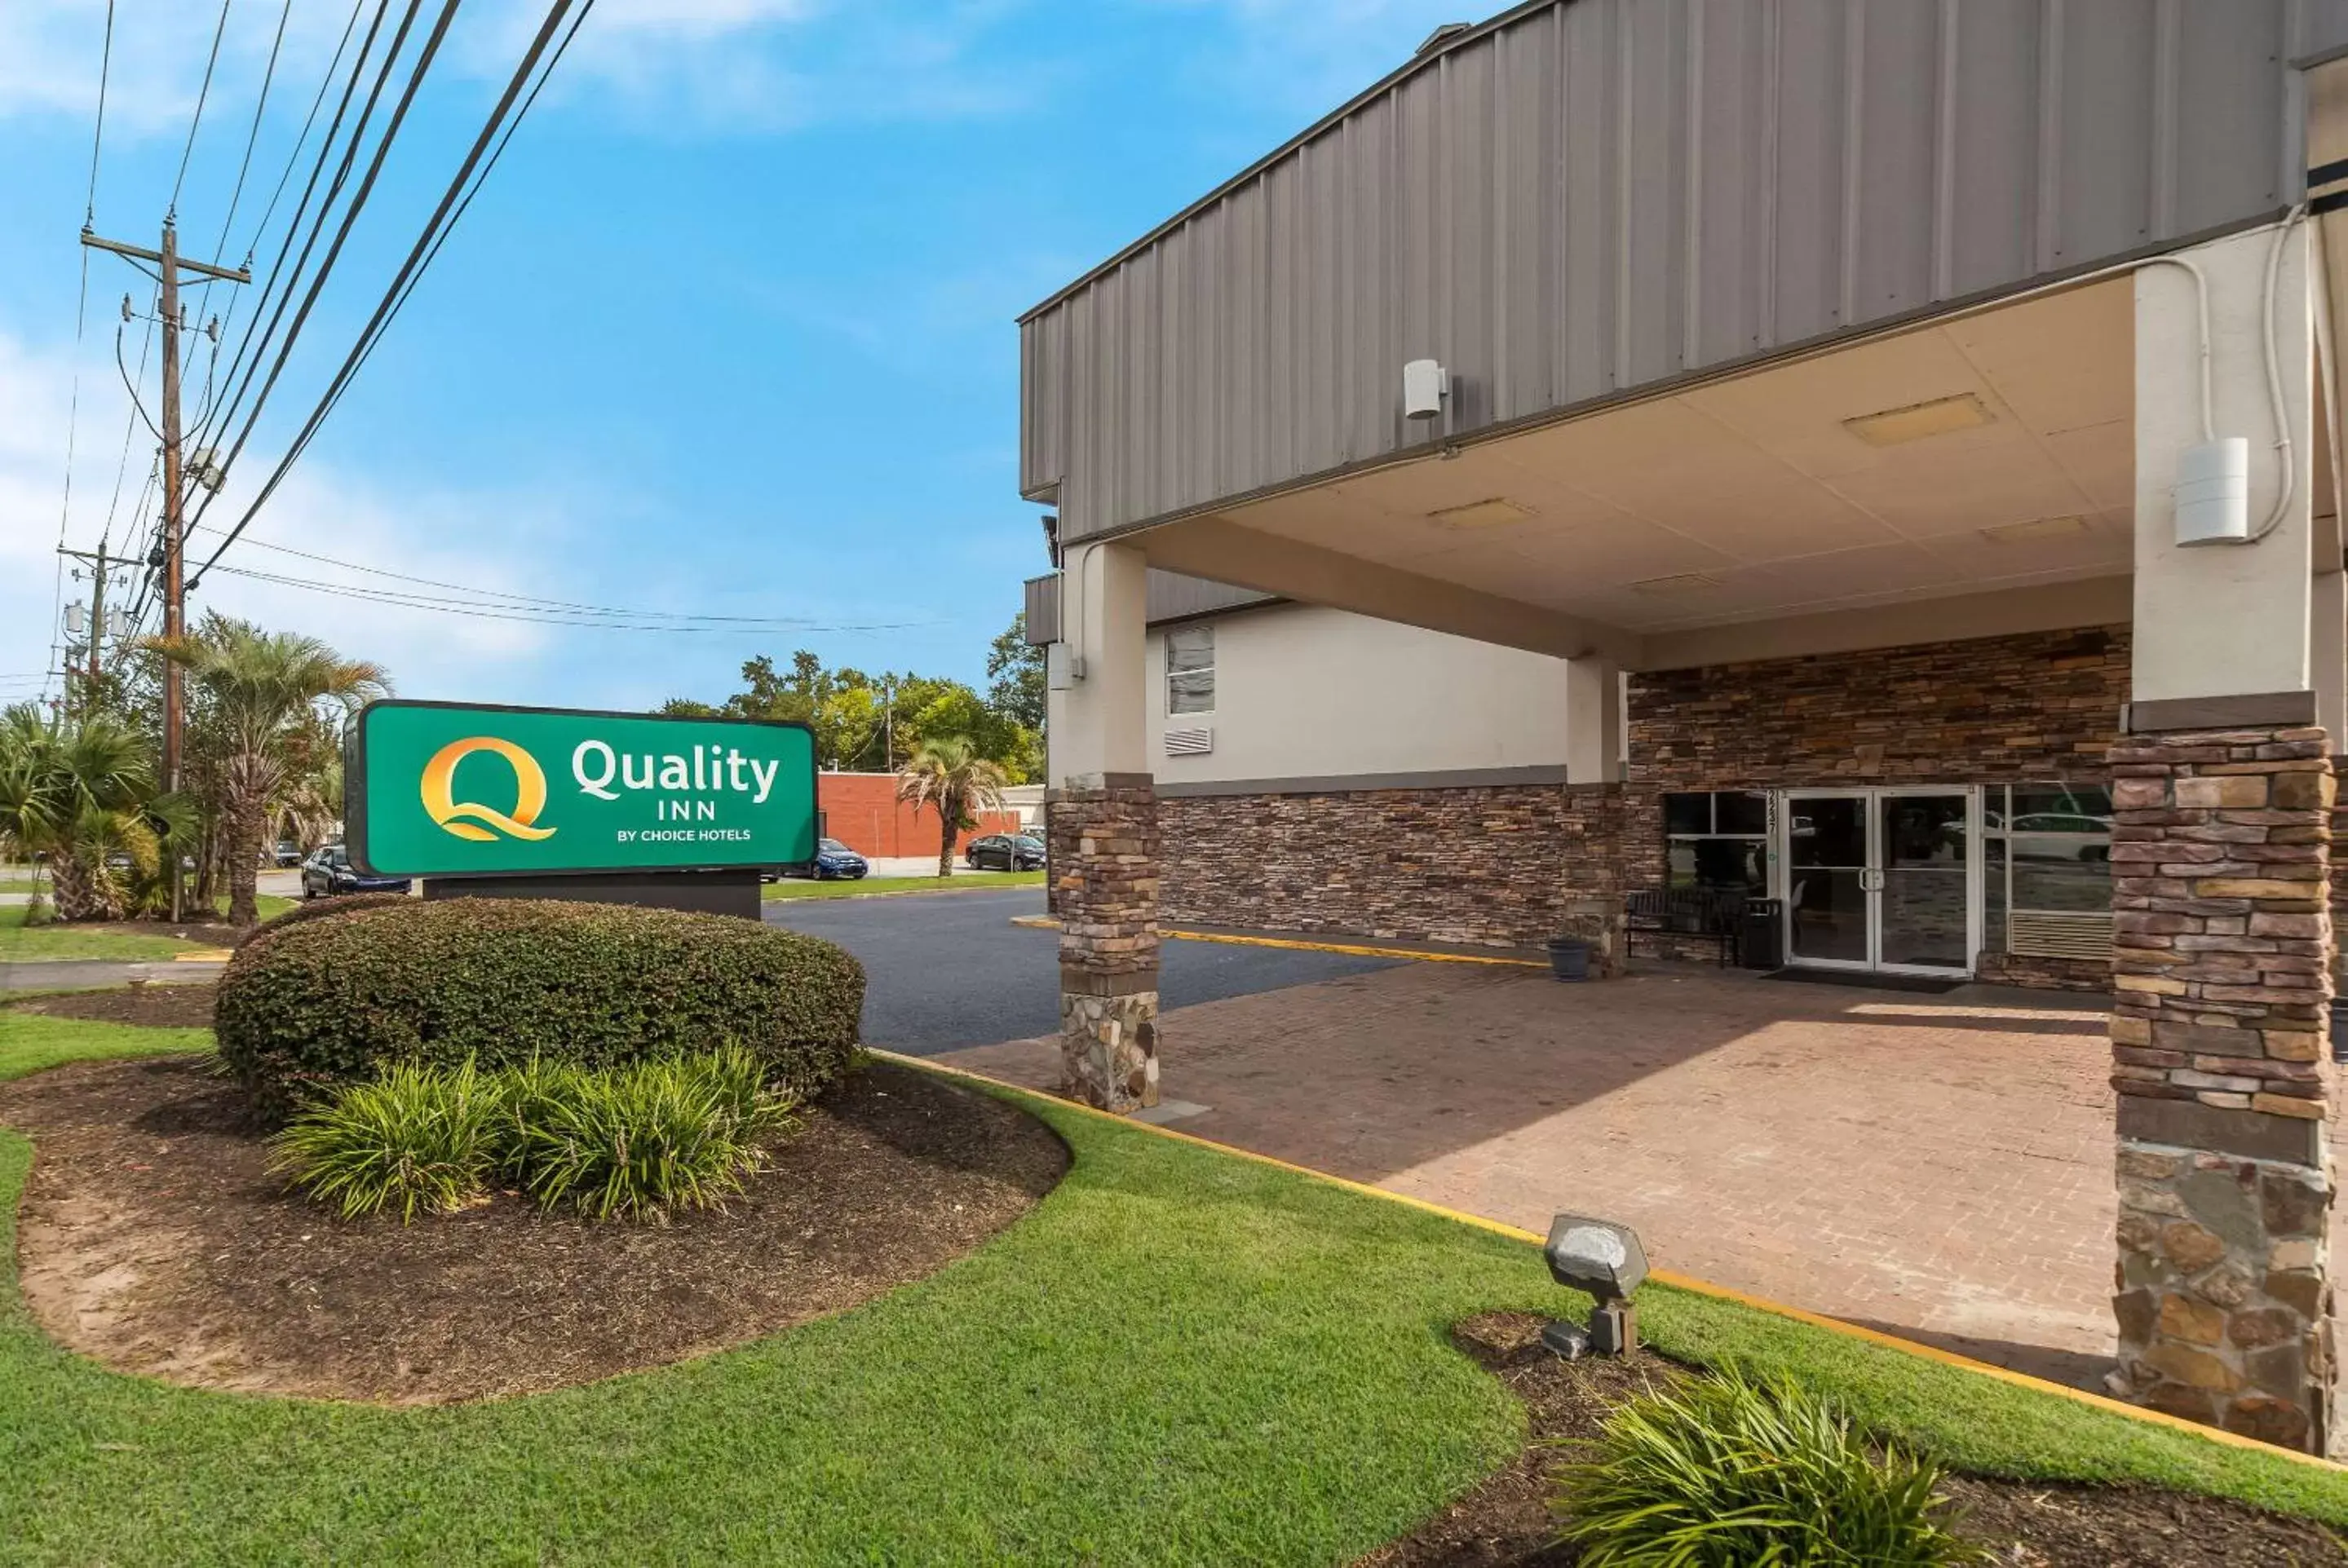 Property building in Quality Inn Charleston - West Ashley